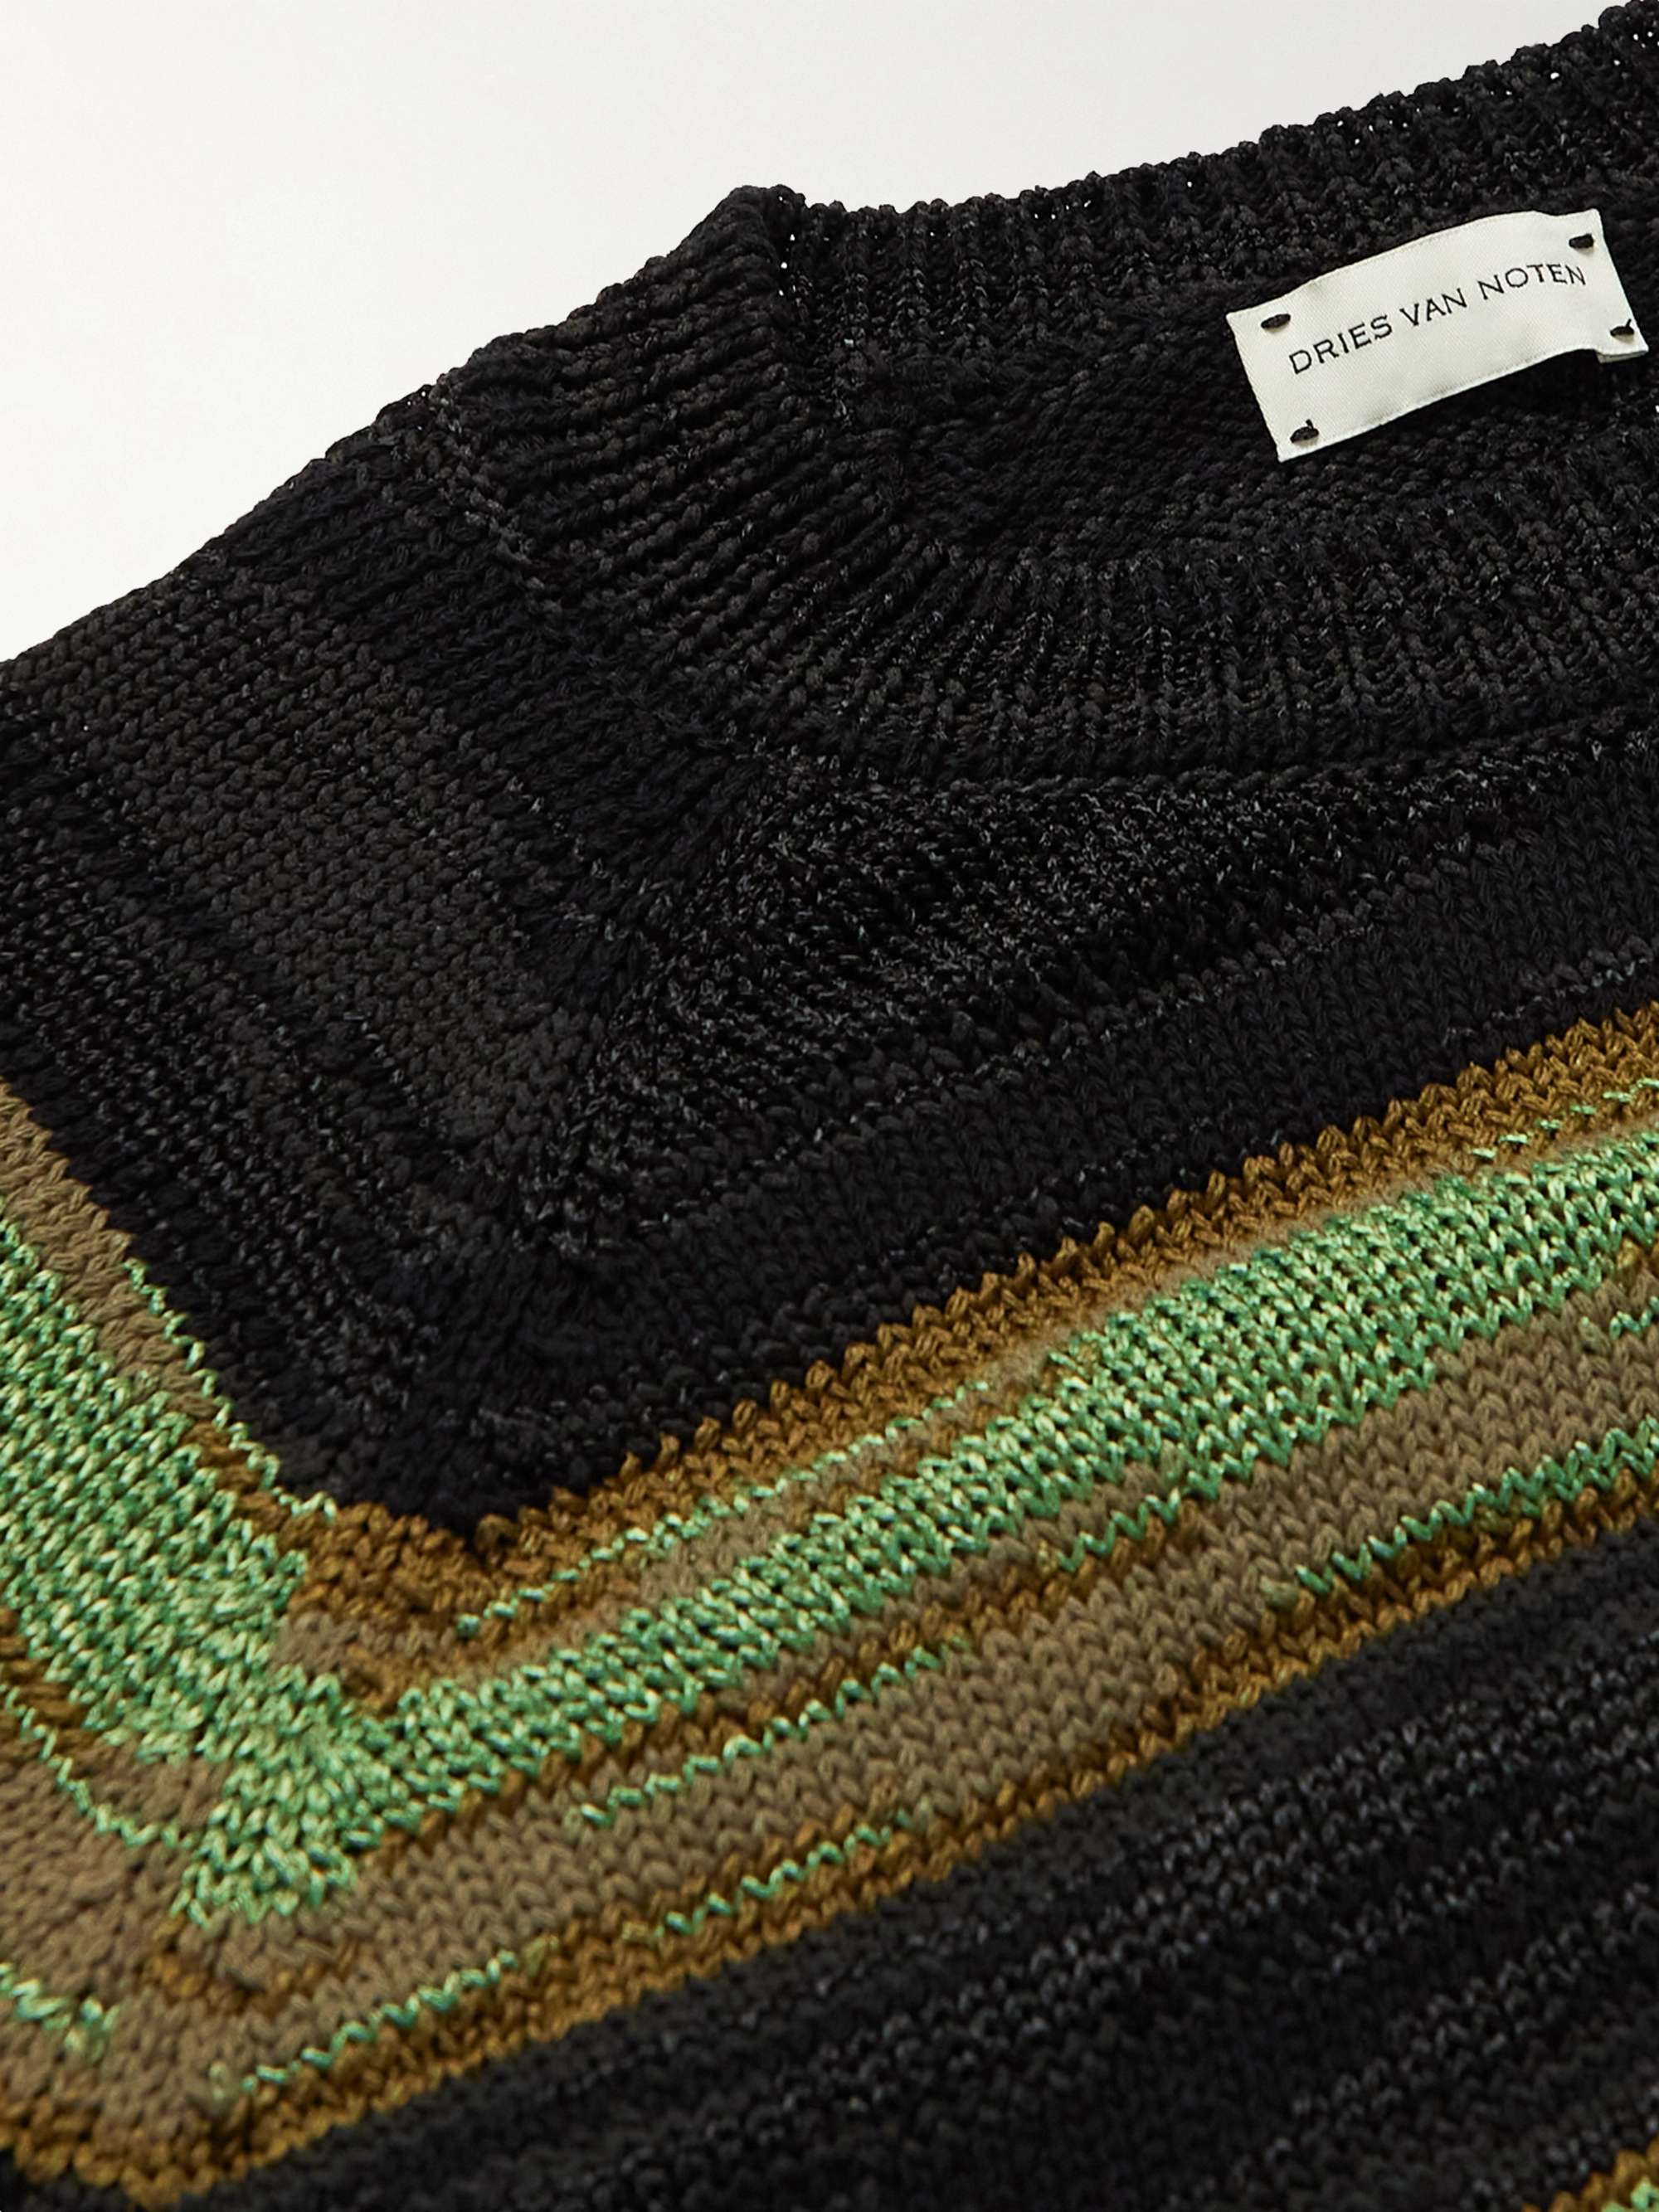 Intarsia-Knit Sweater